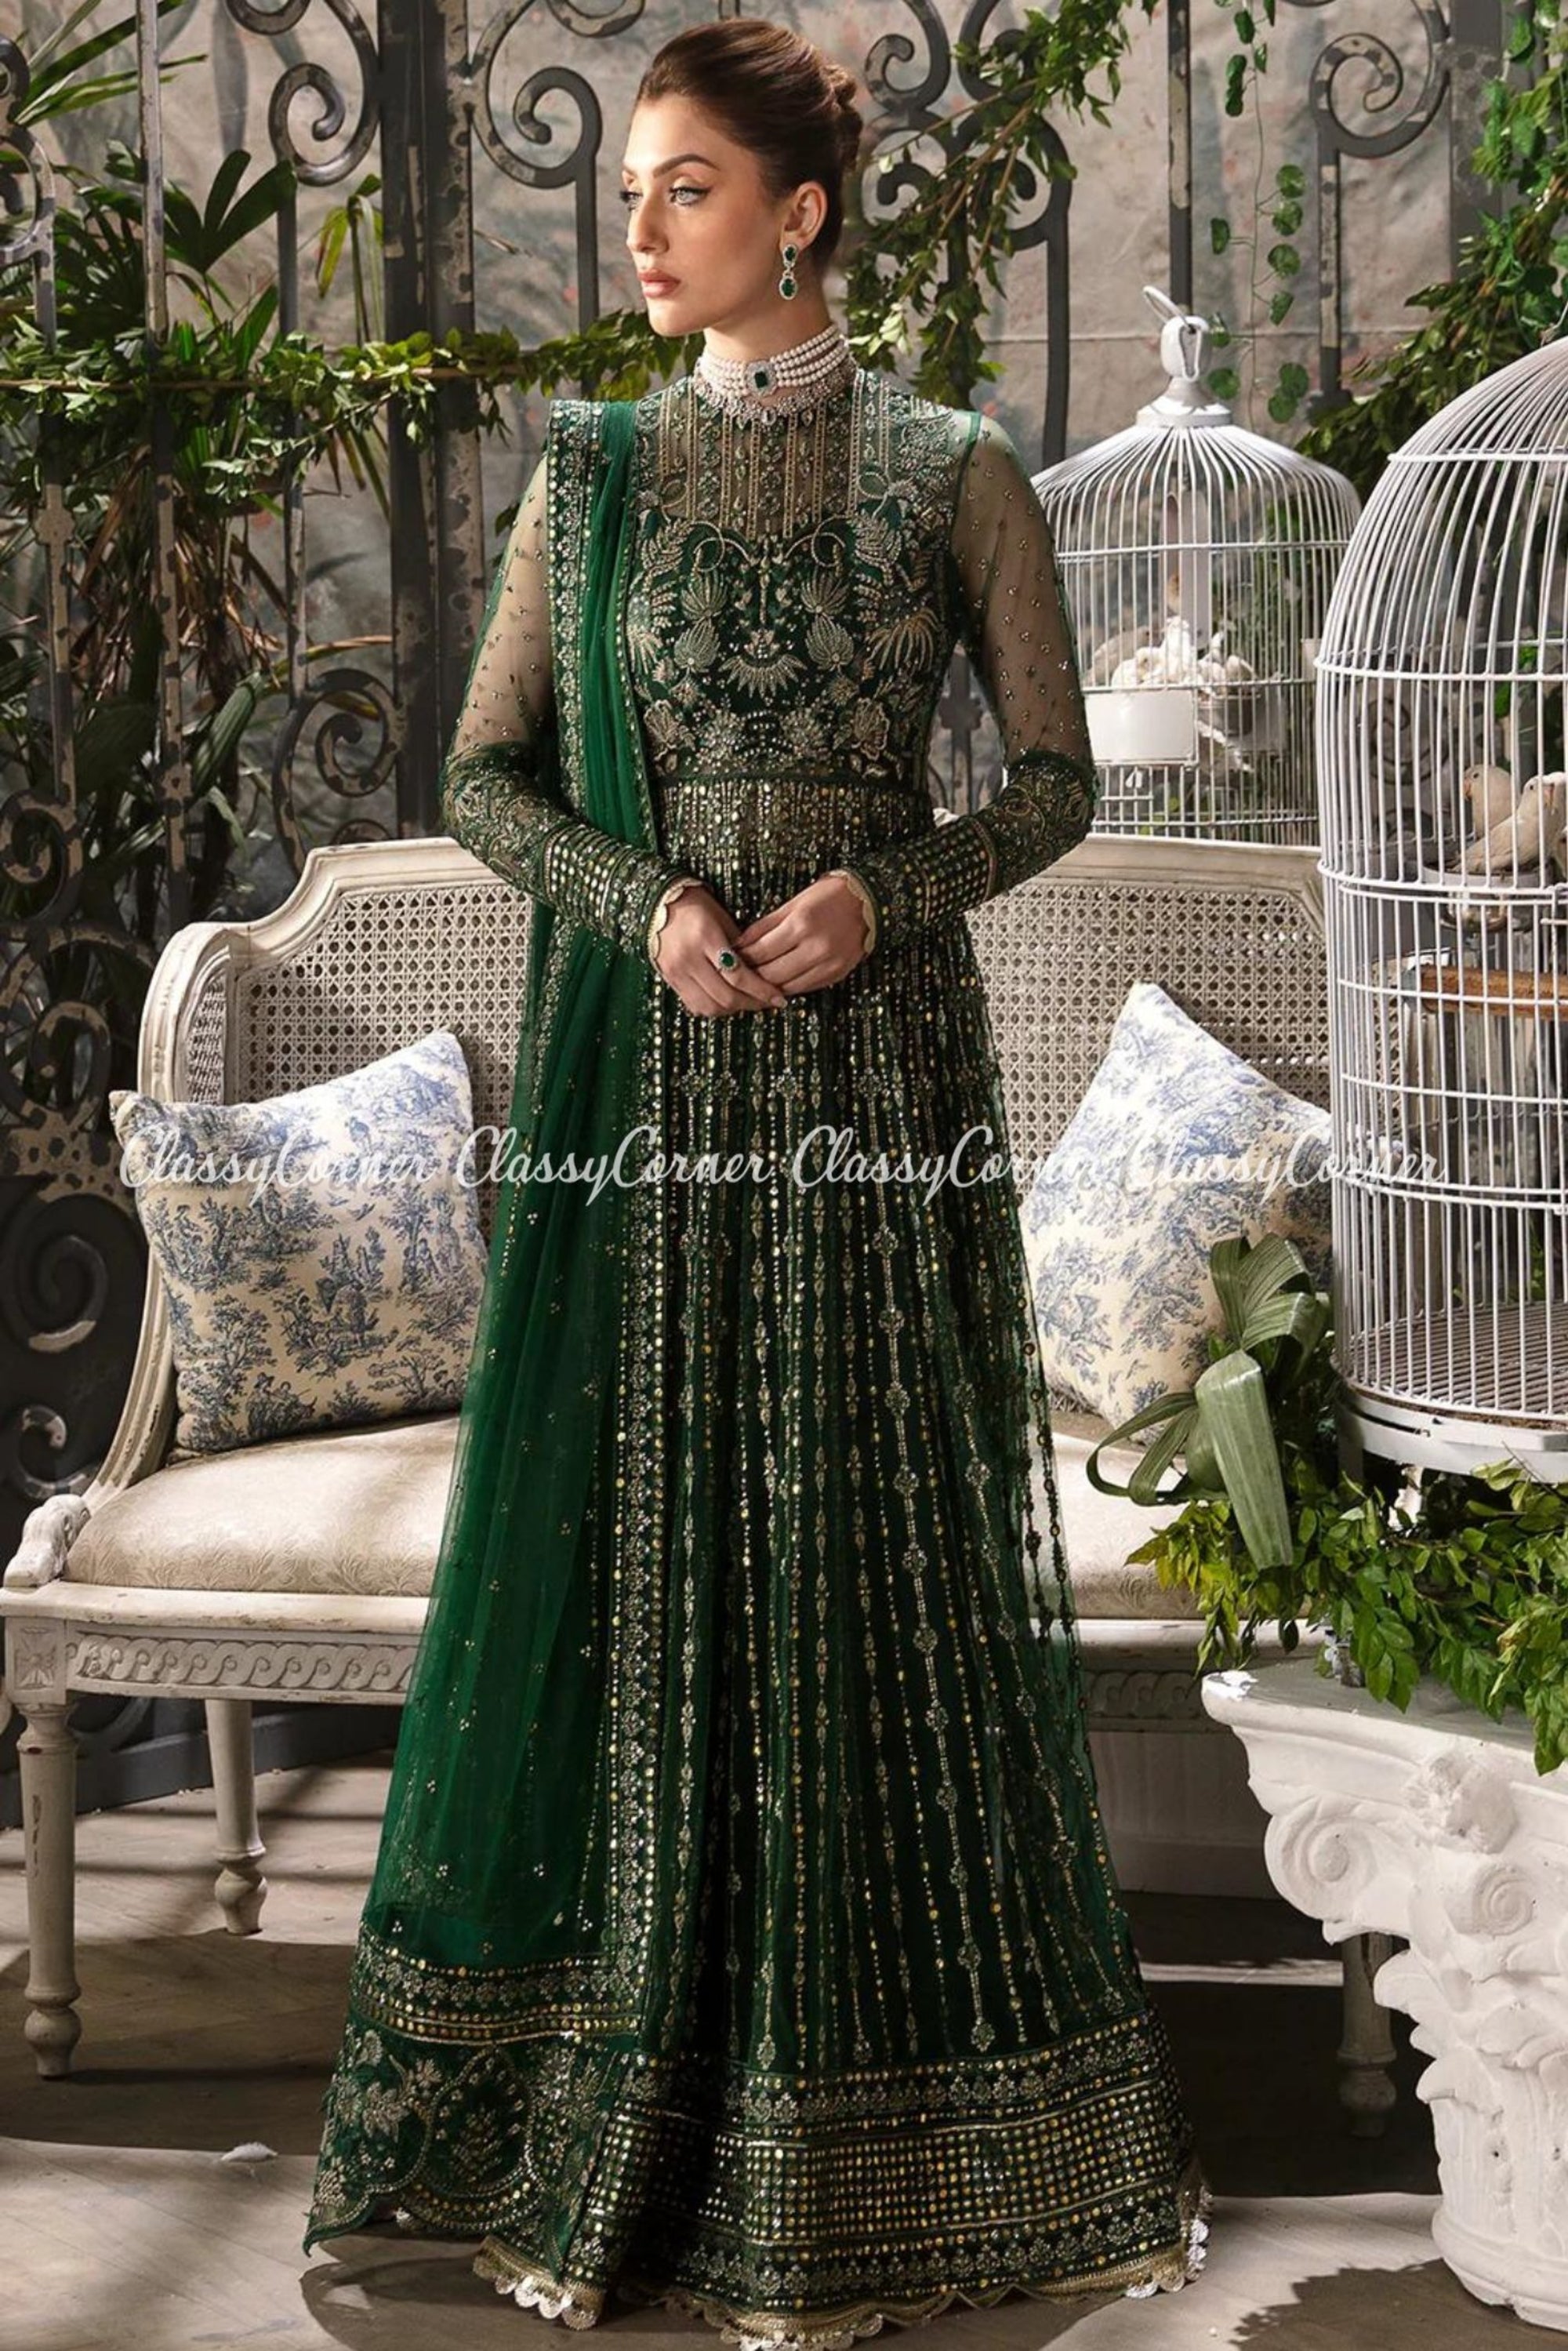 pakistani wedding outfit designers